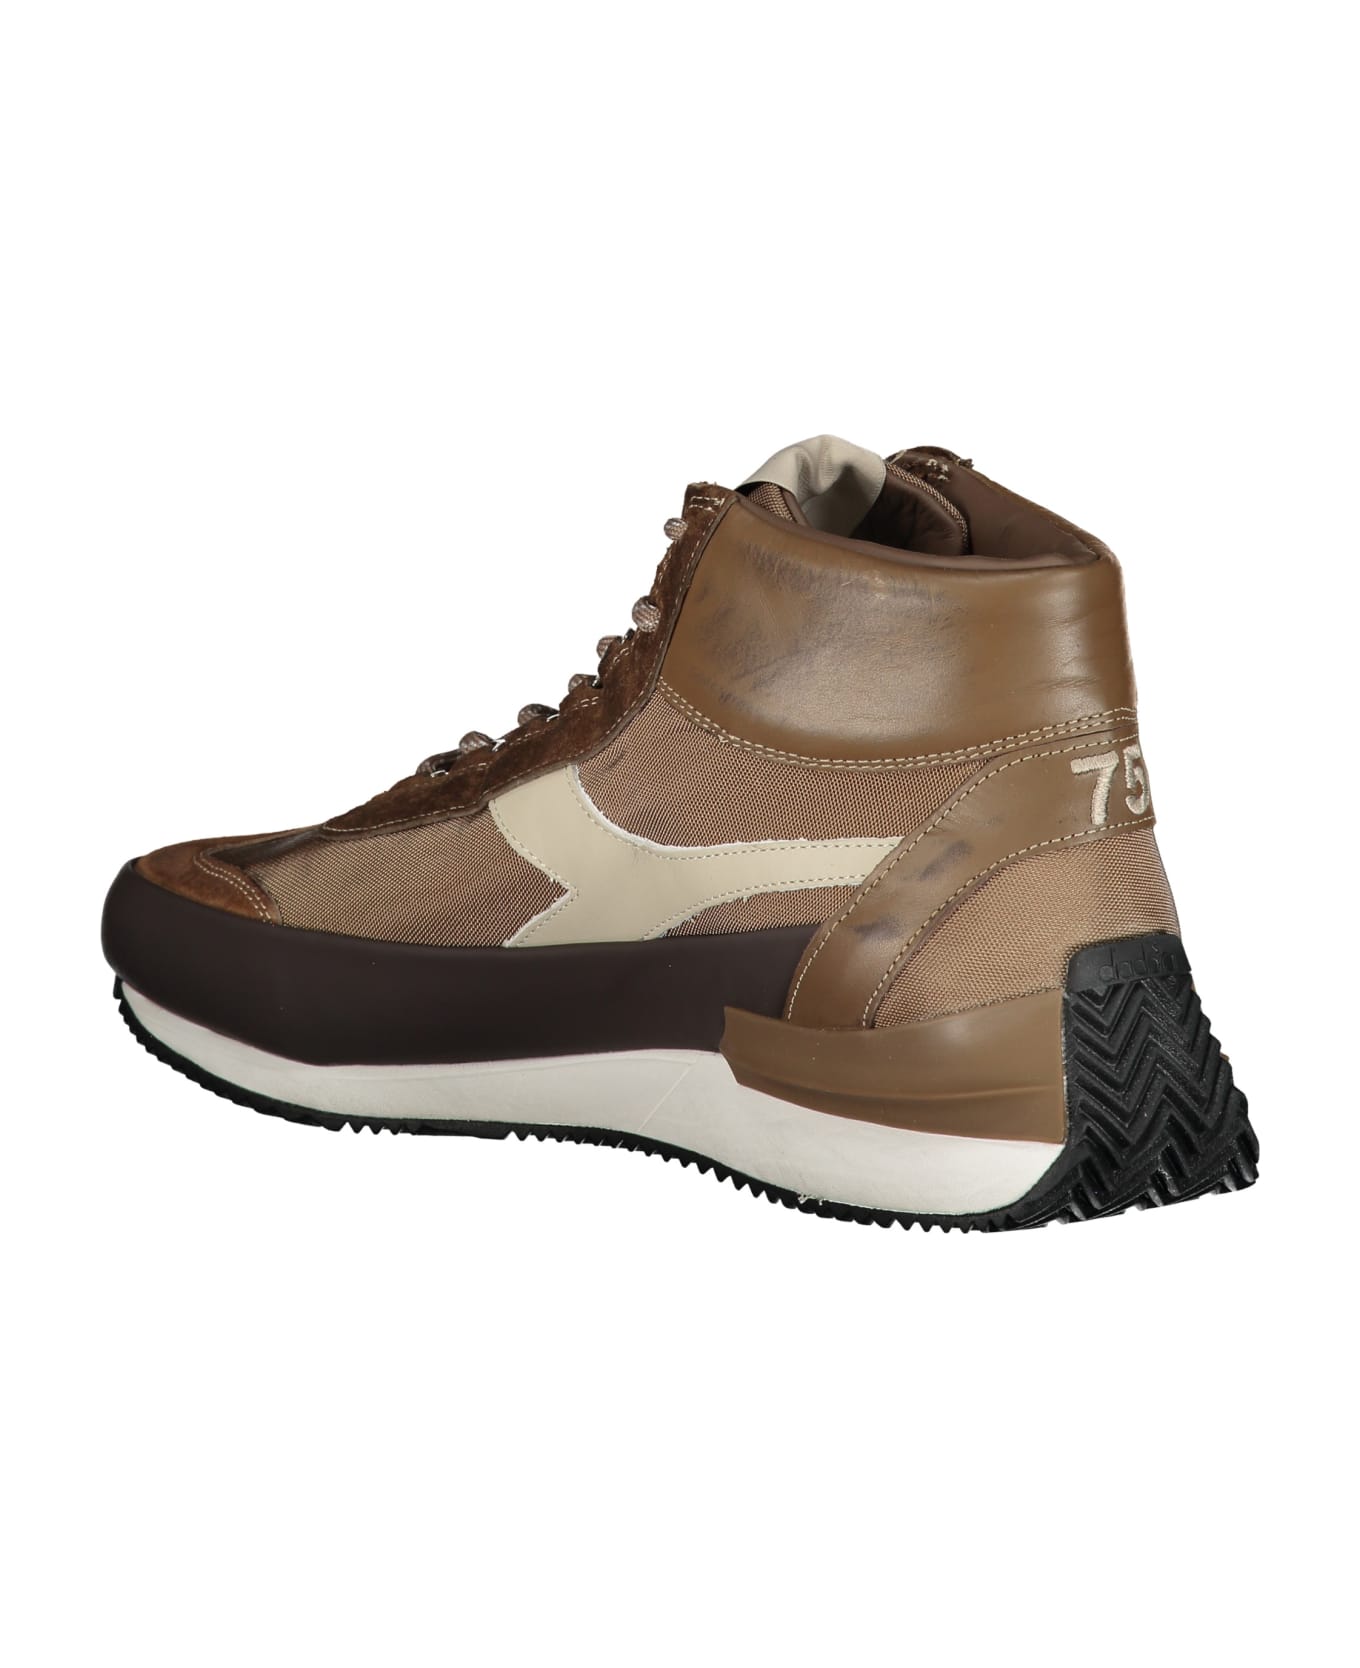 Diadora Leather Sneakers - brown